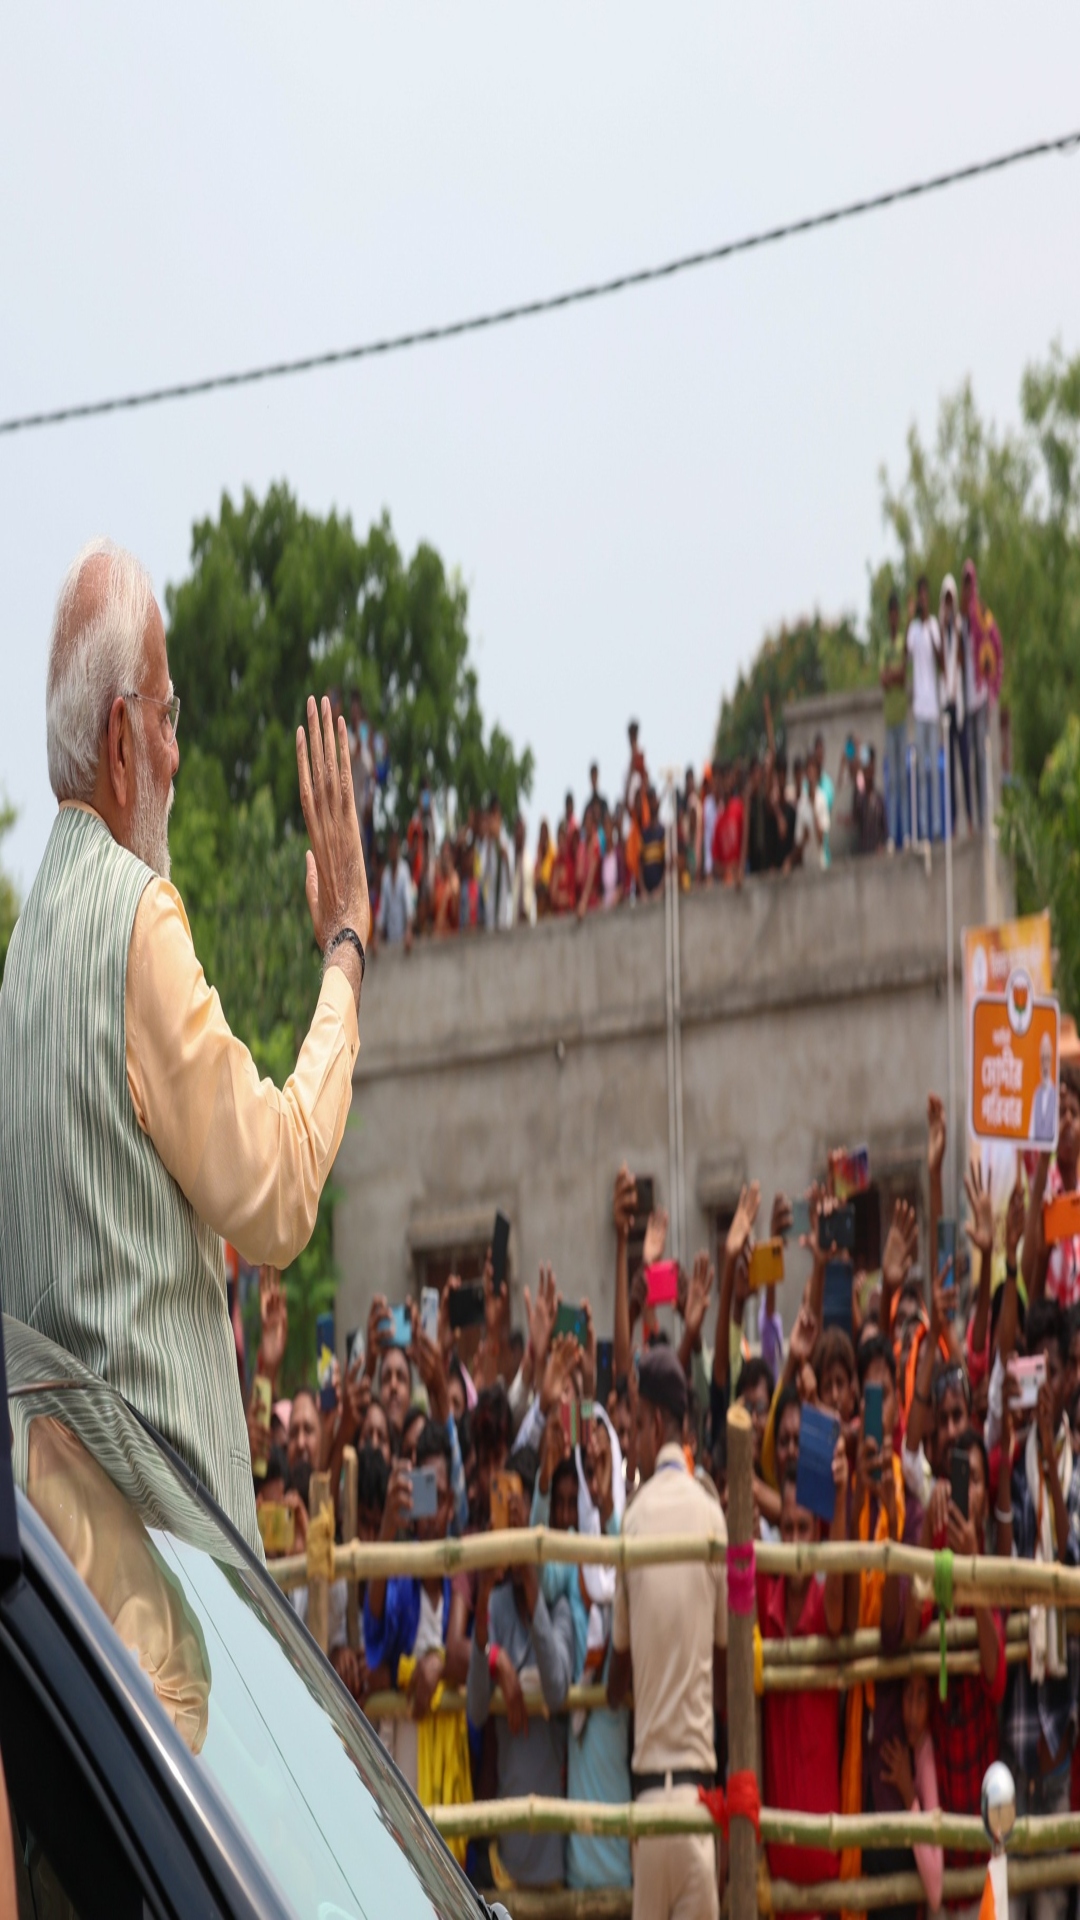 PM Modi's rallies in West Bengal: Six key takeaways